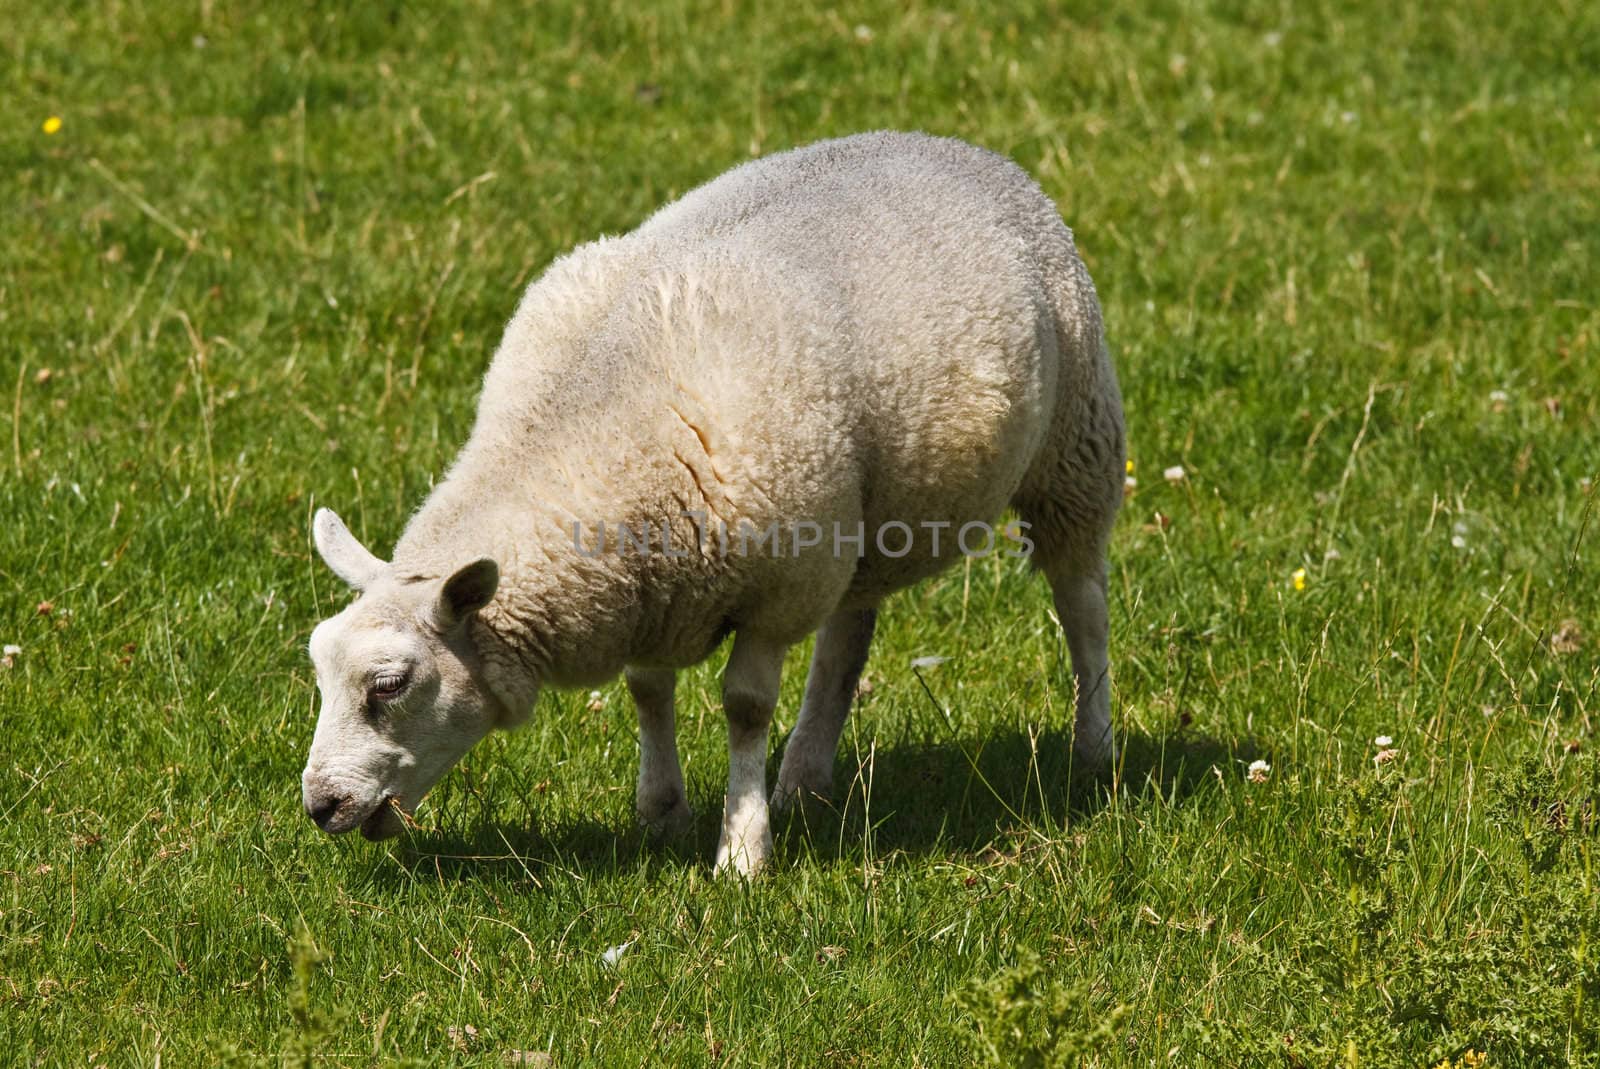 White sheep grazing on field in summersun - horizontal